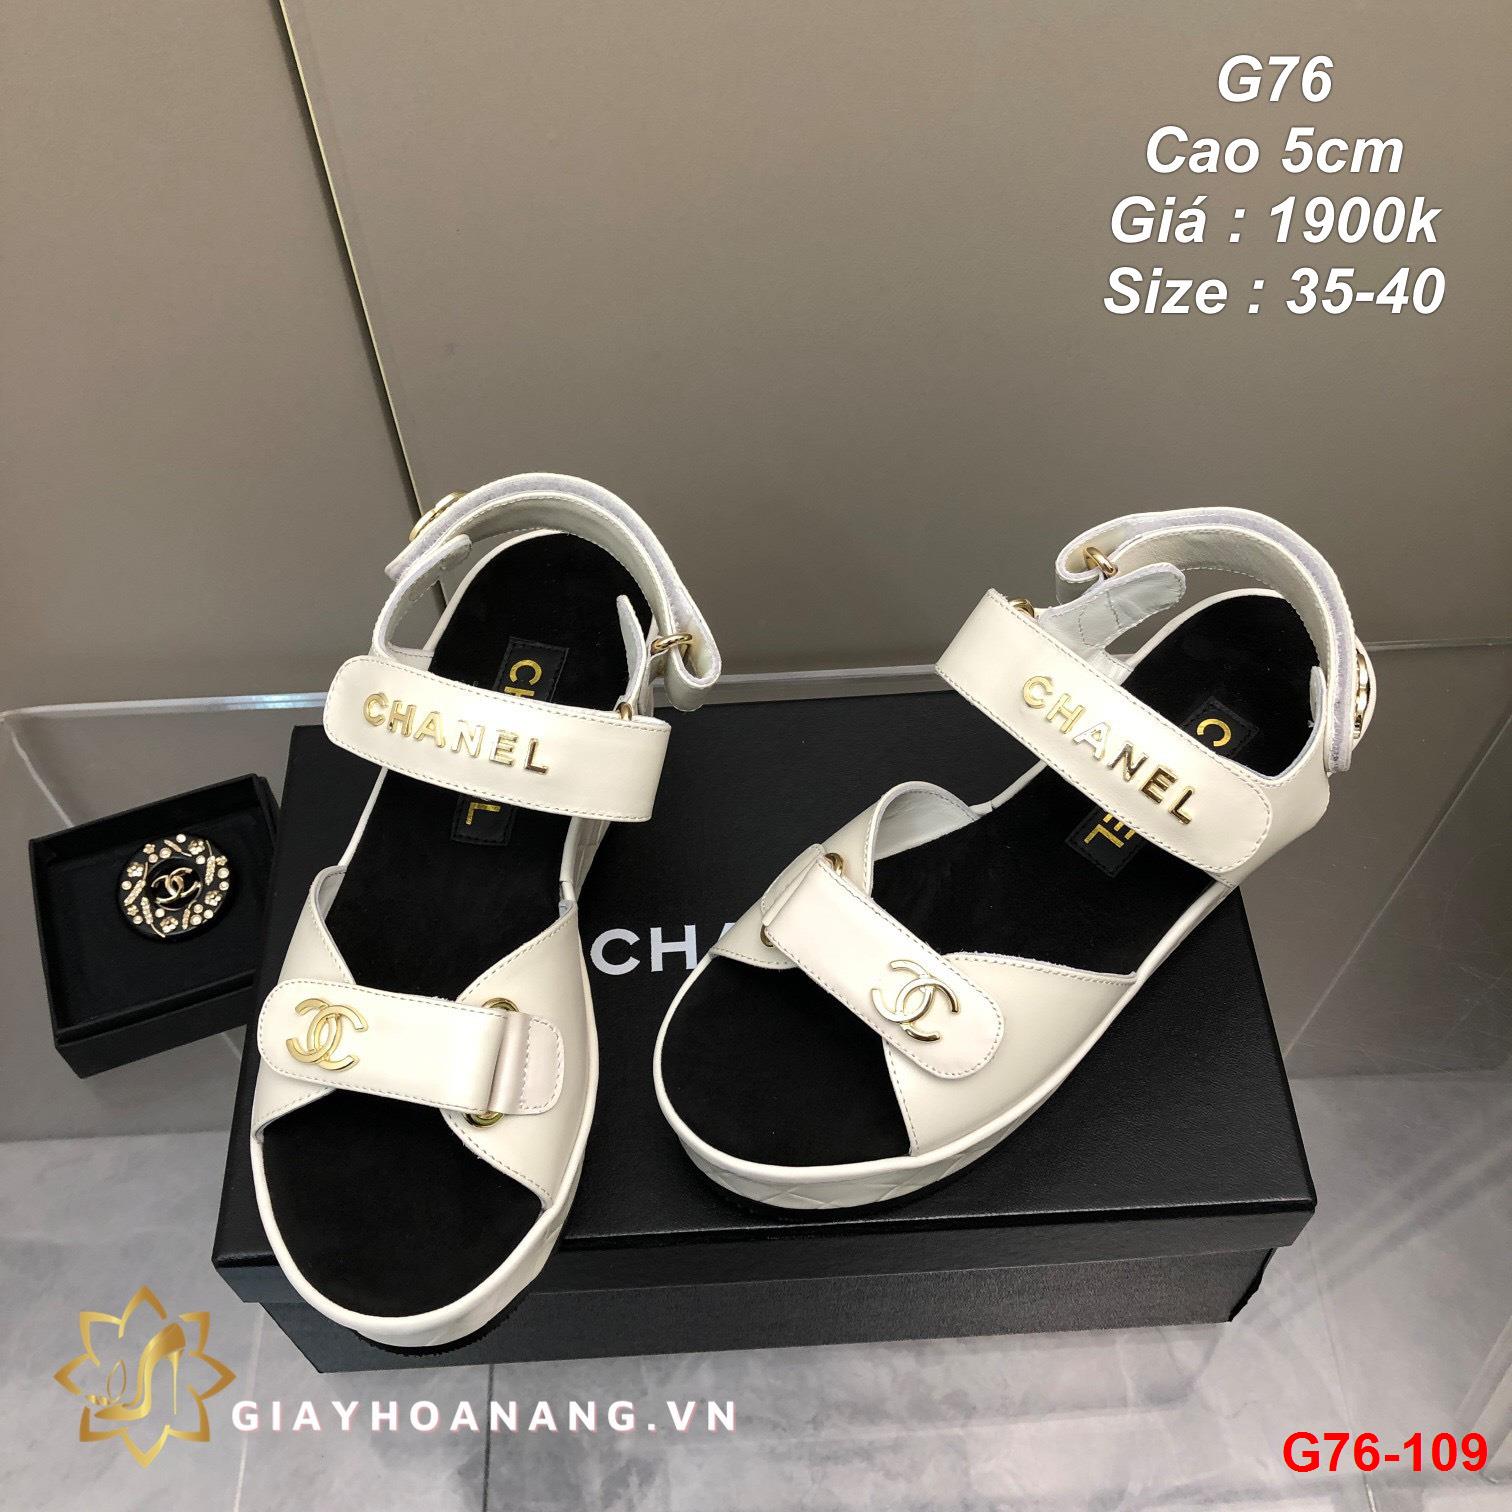 G76-109 Chanel sandal cao 5cm siêu cấp